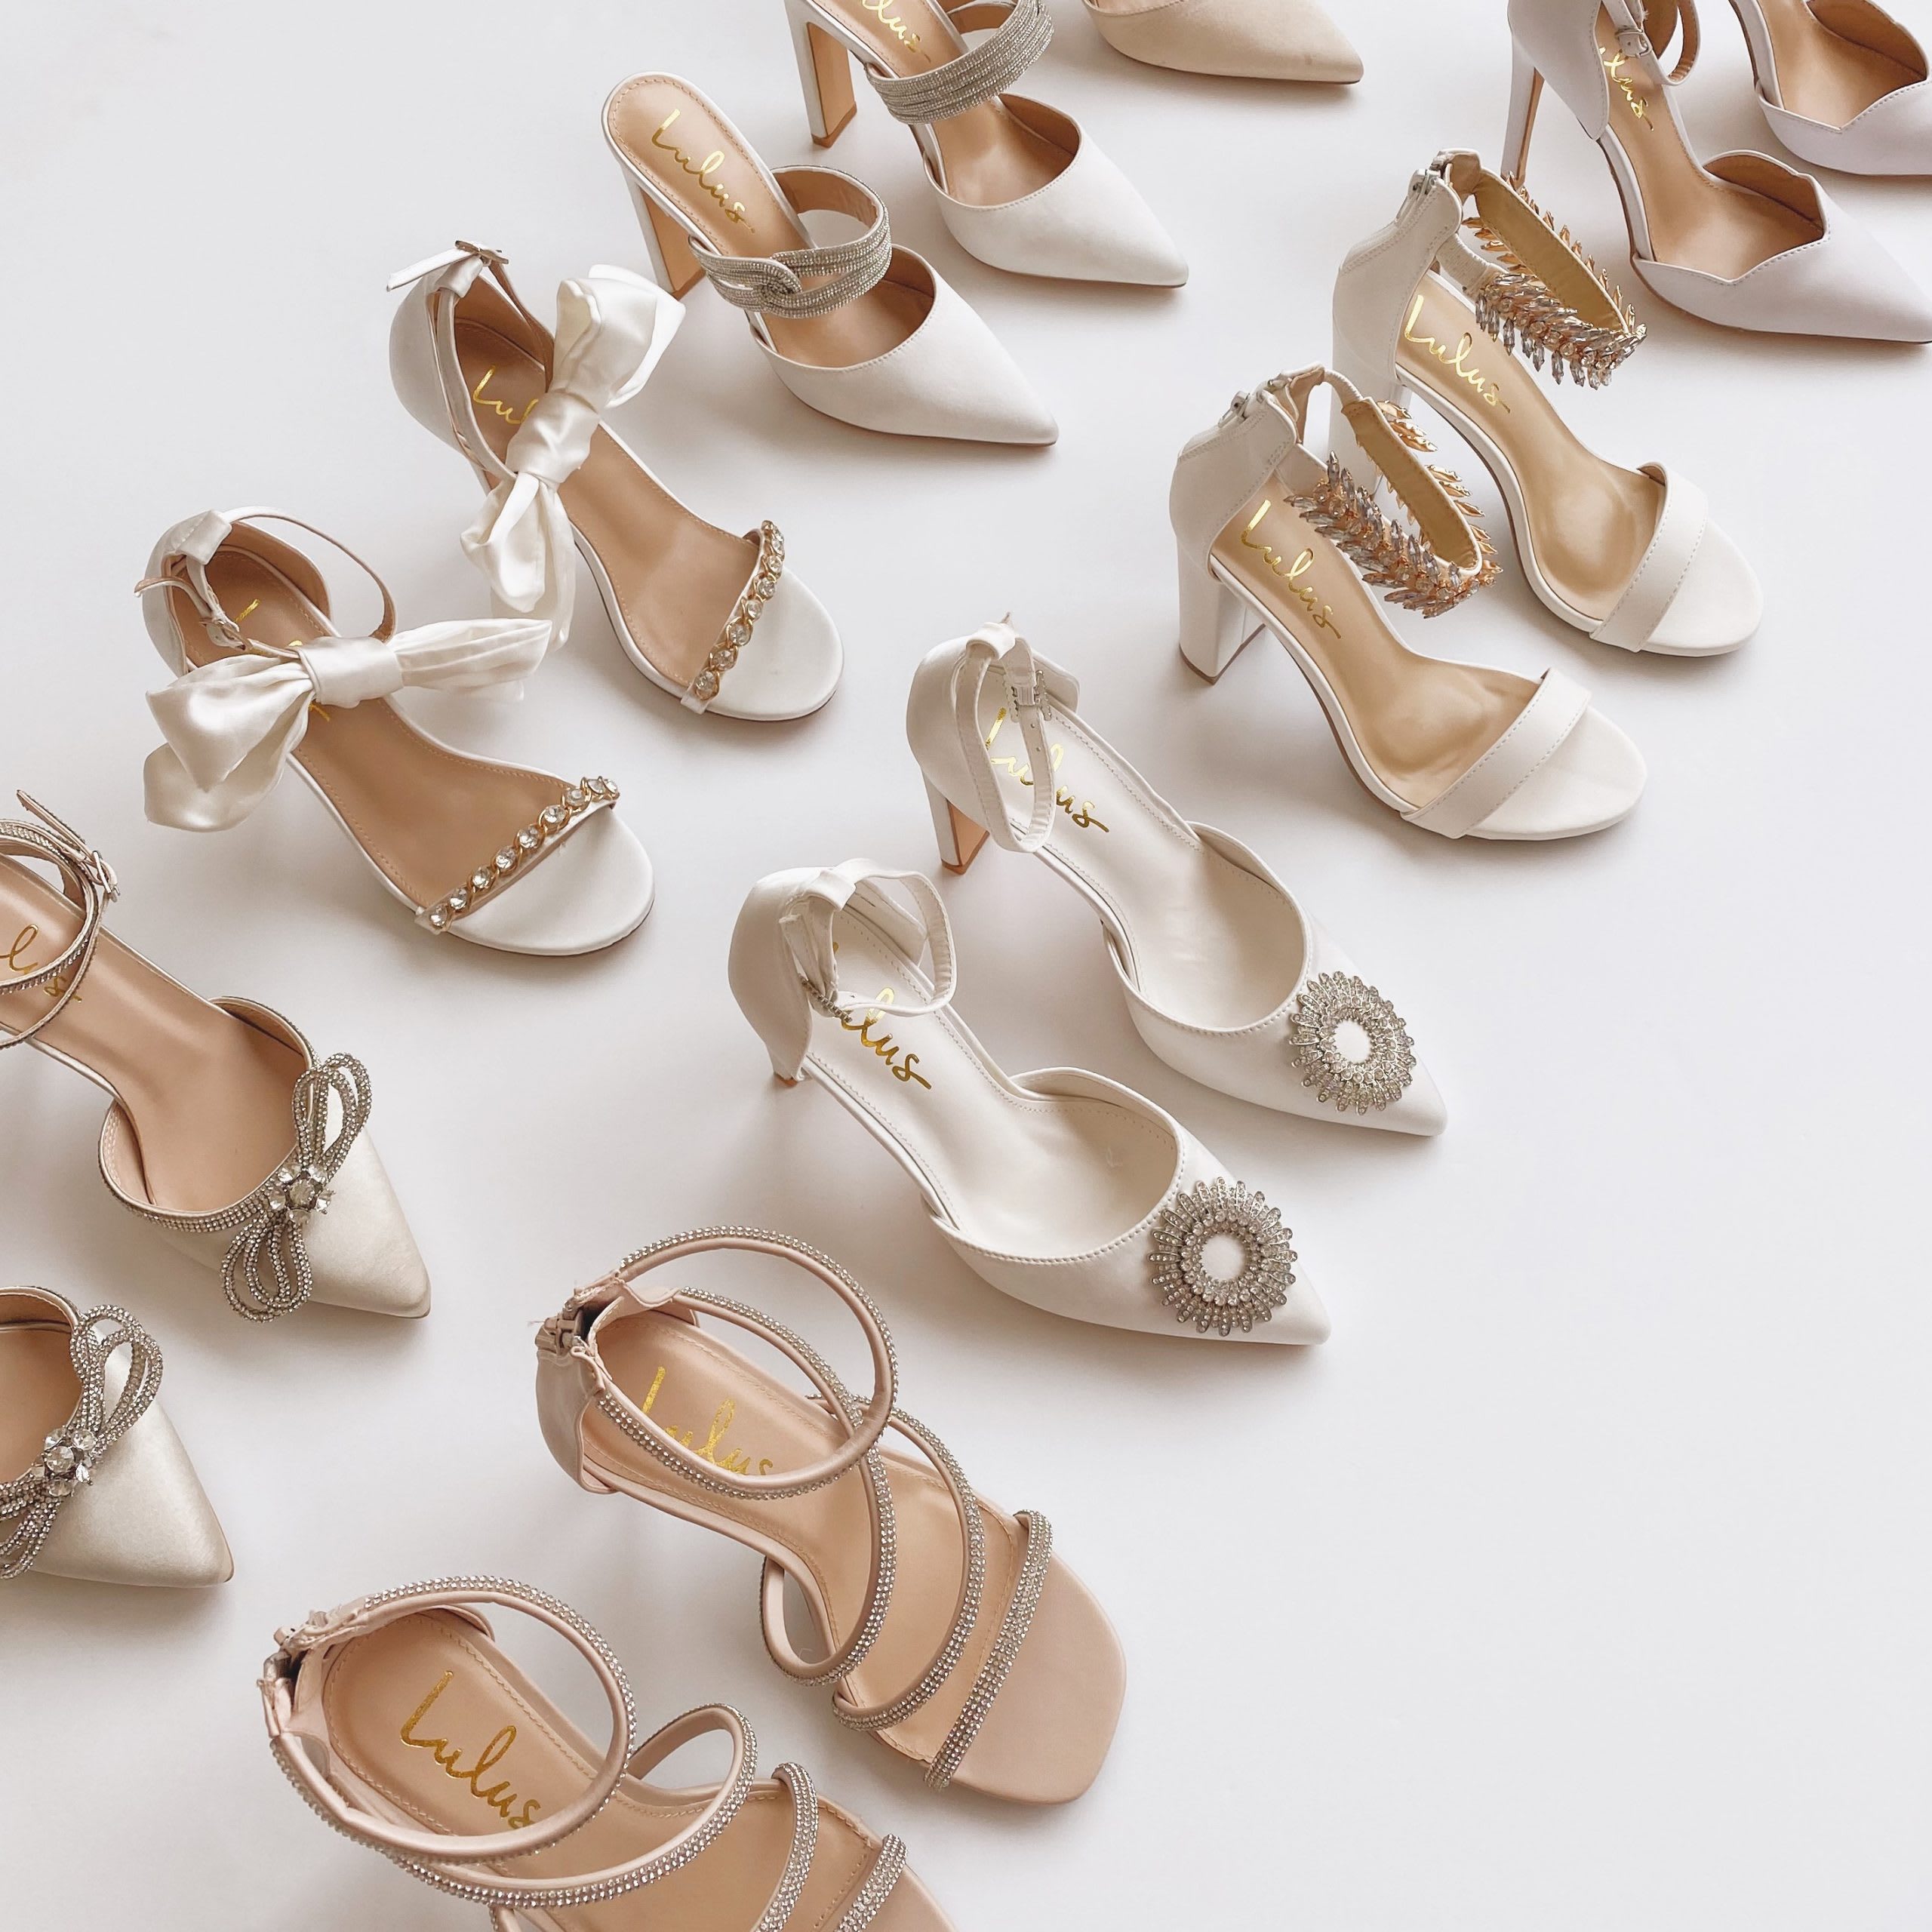 The 34 Best Wedding Shoes For Brides: - Lulus.com Fashion Blog